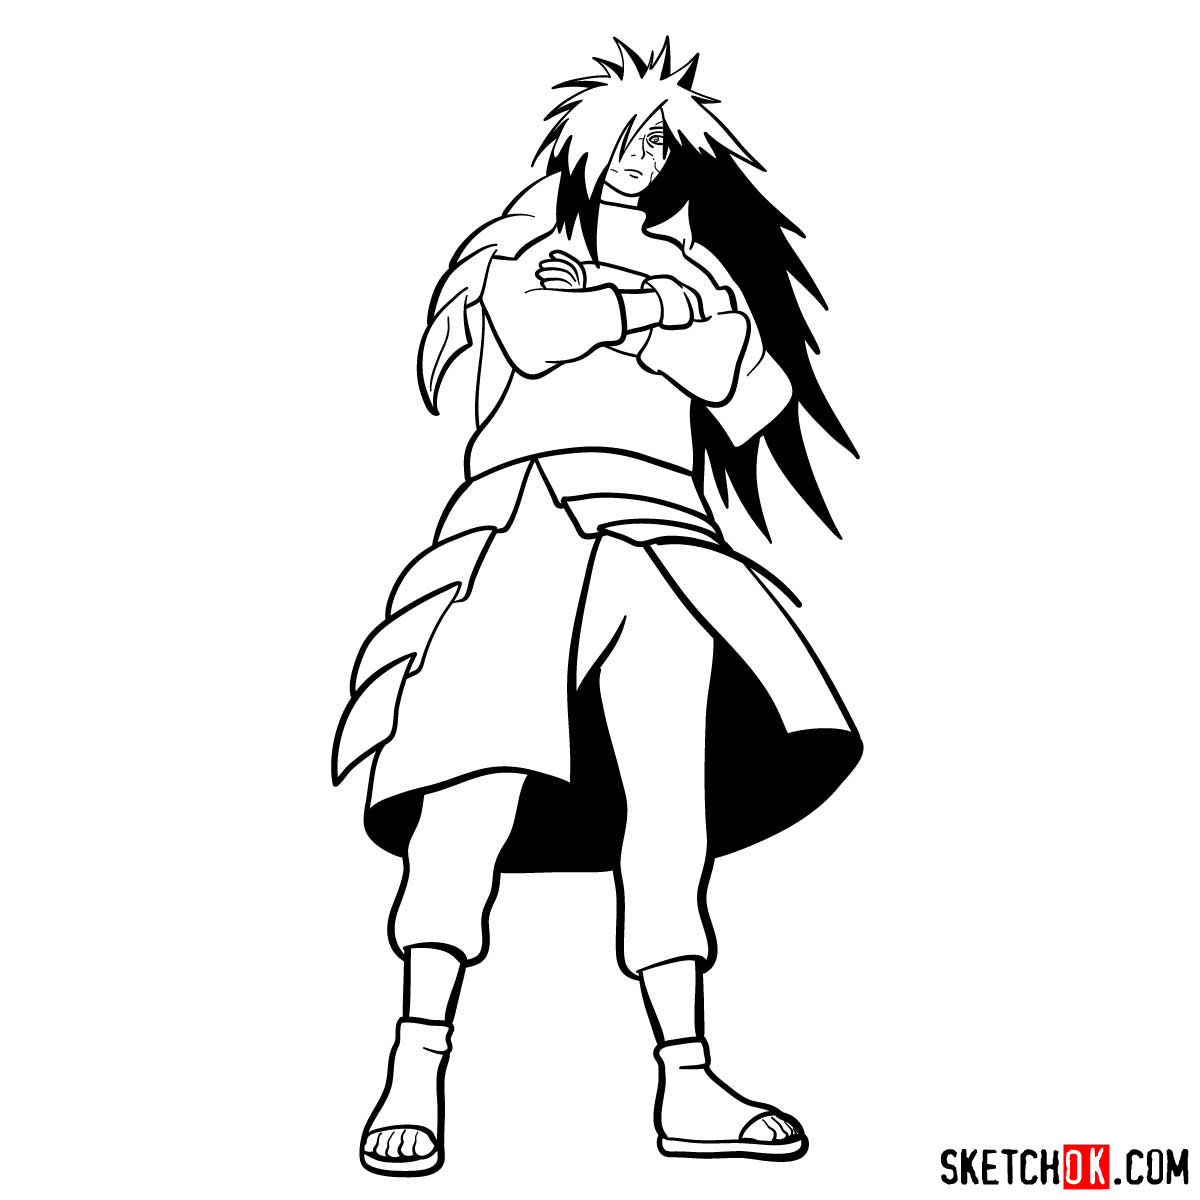 How to draw Madara Uchiha from Naruto anime - step 14